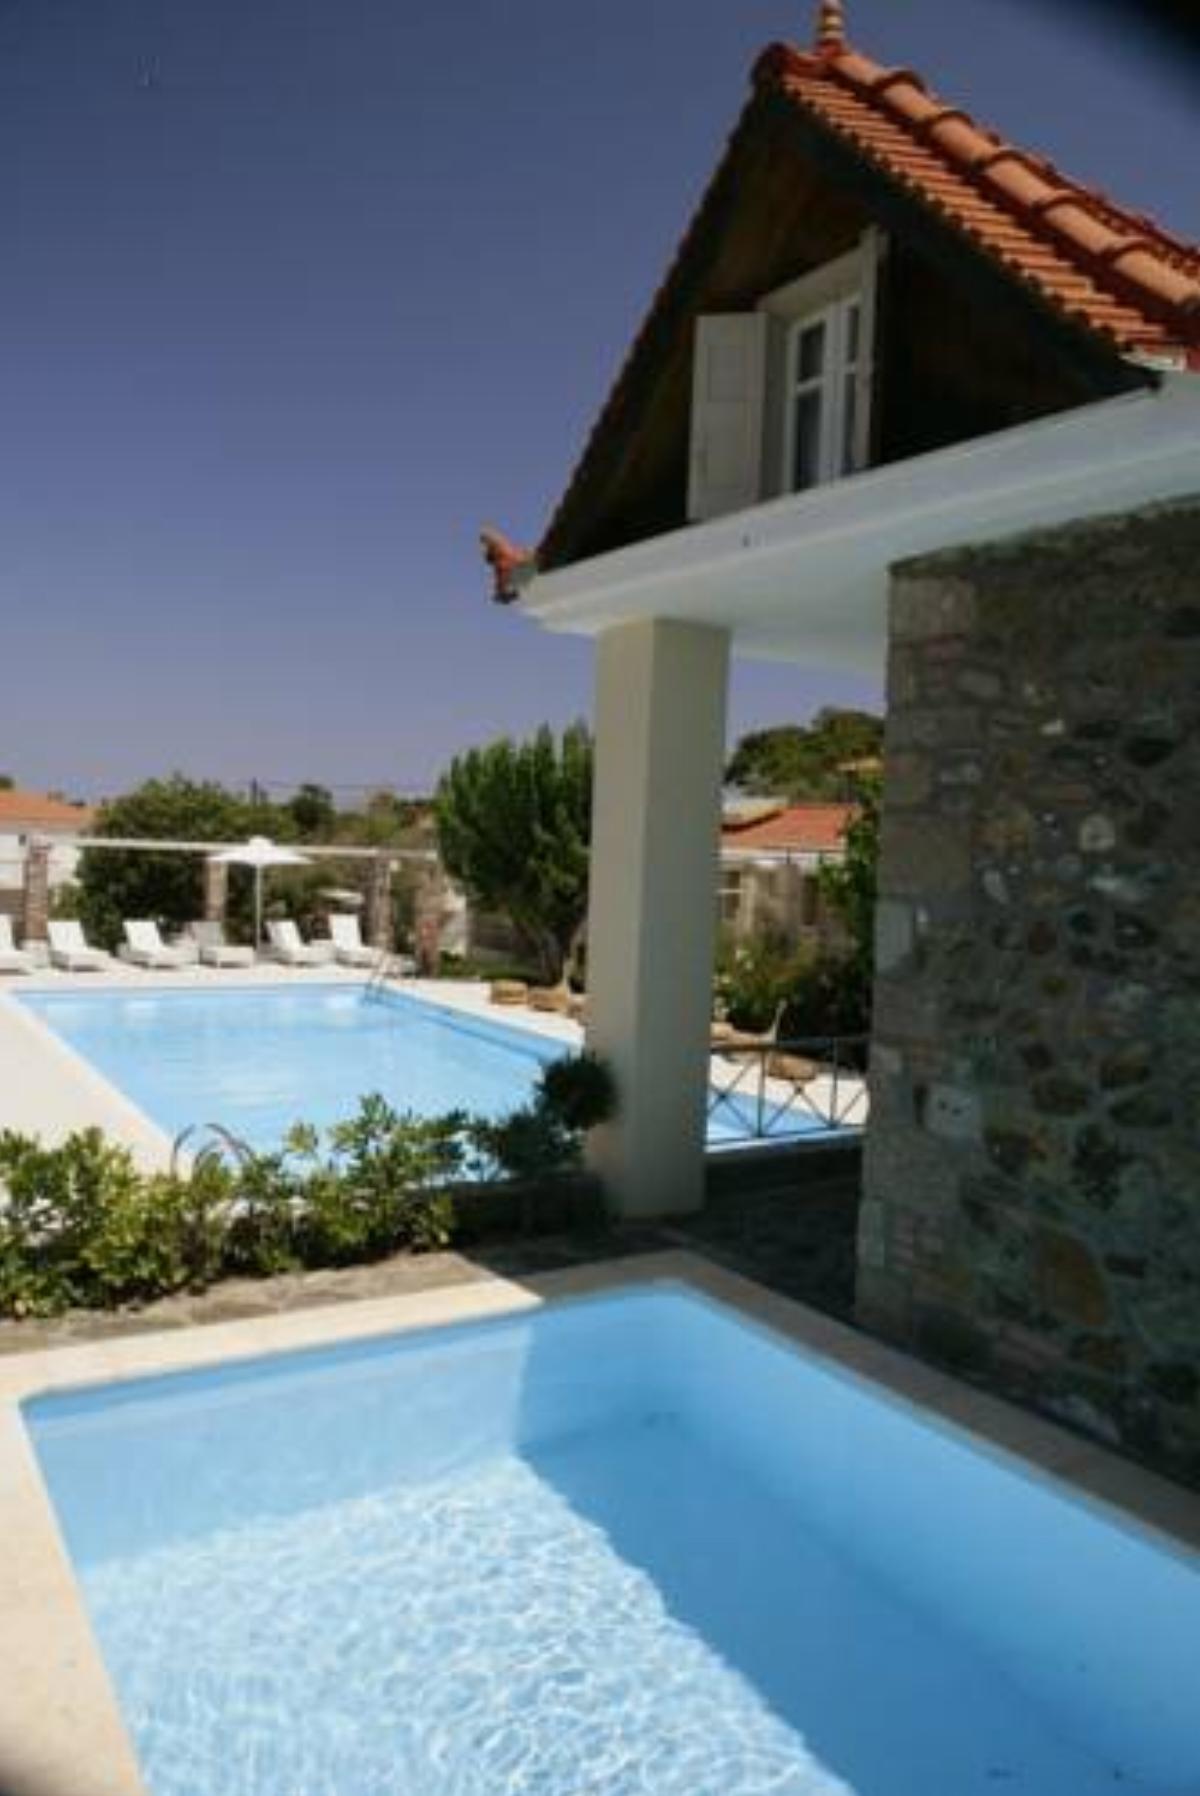 Oikies Small Elegant Houses Hotel Neapoli Greece